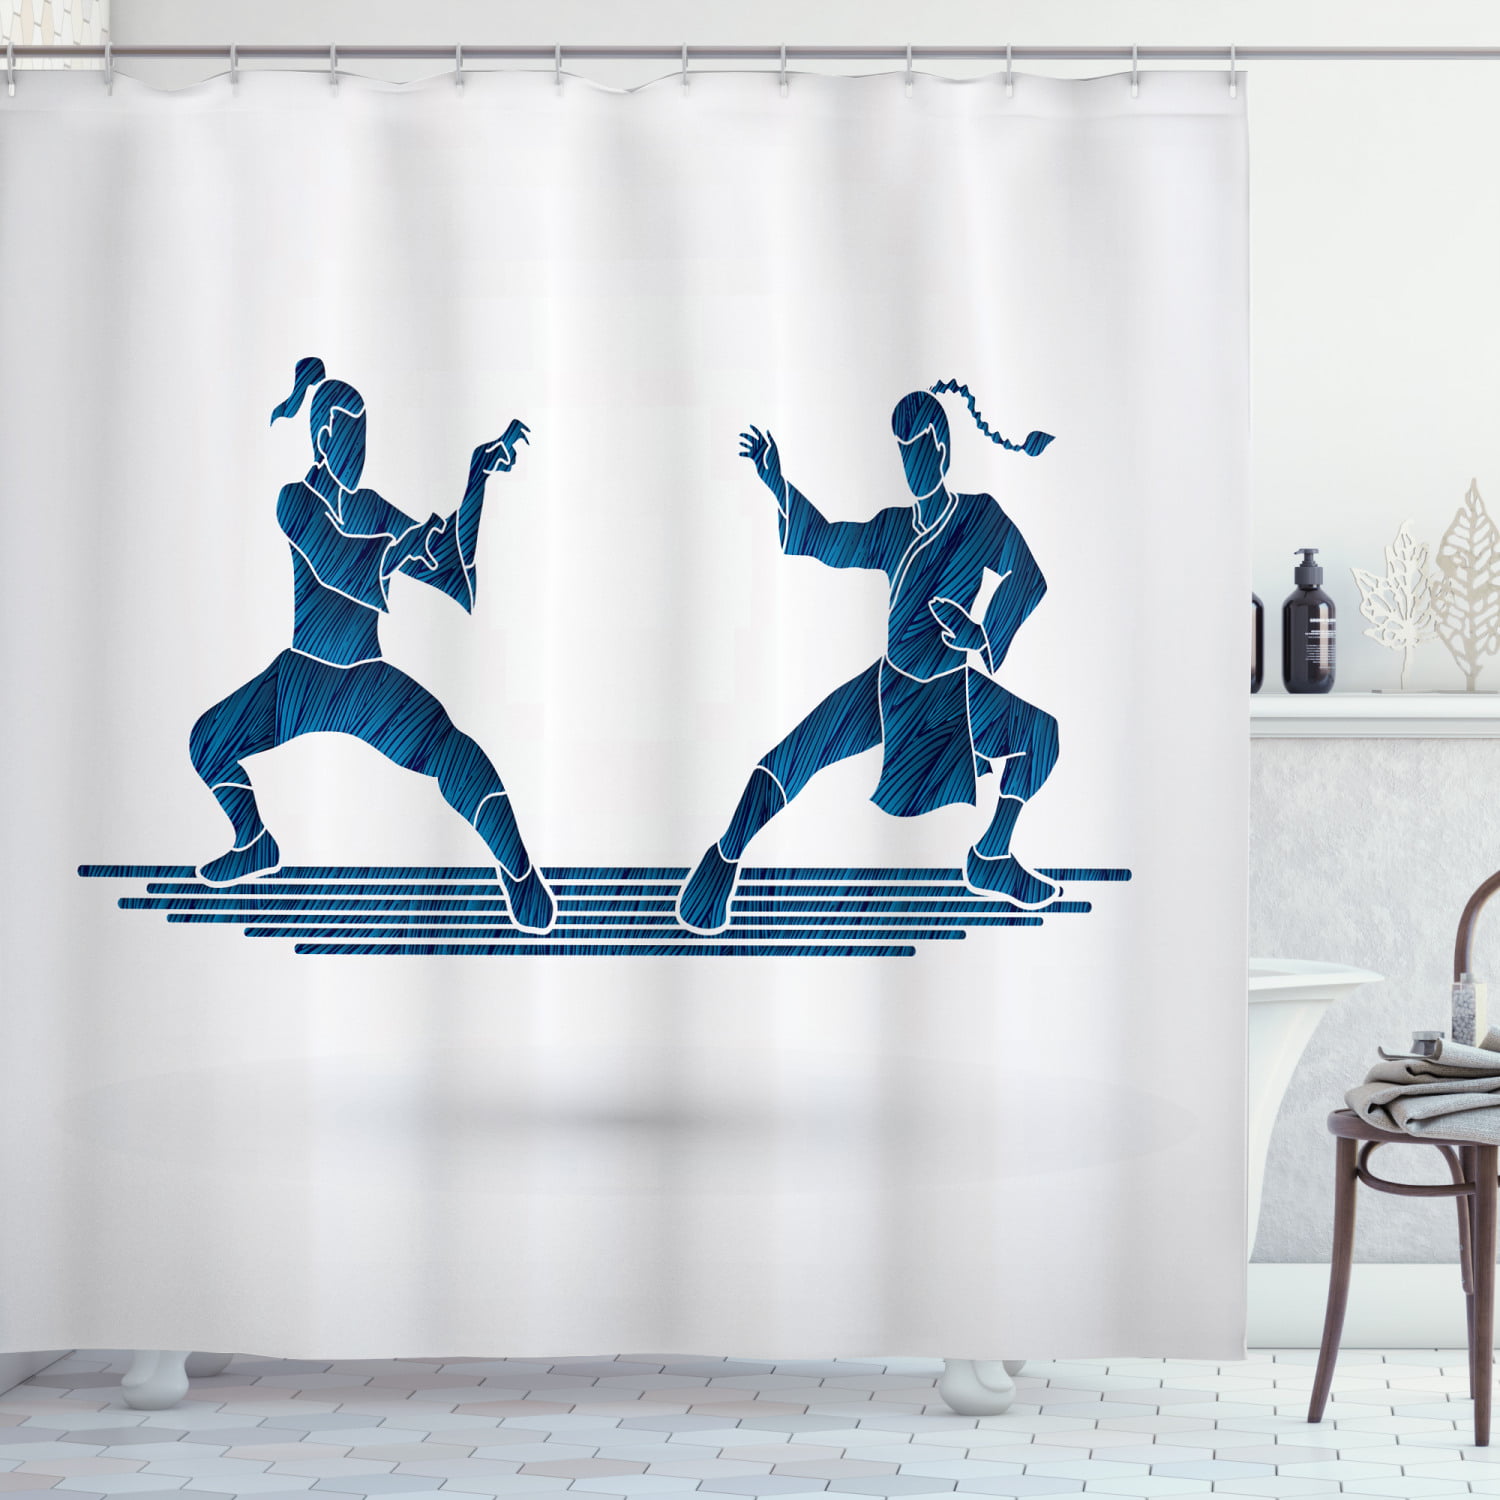 Waterproof Fabric Home Decor Shower Curtain Bathroom Mat Sports Taekwondo 71" 